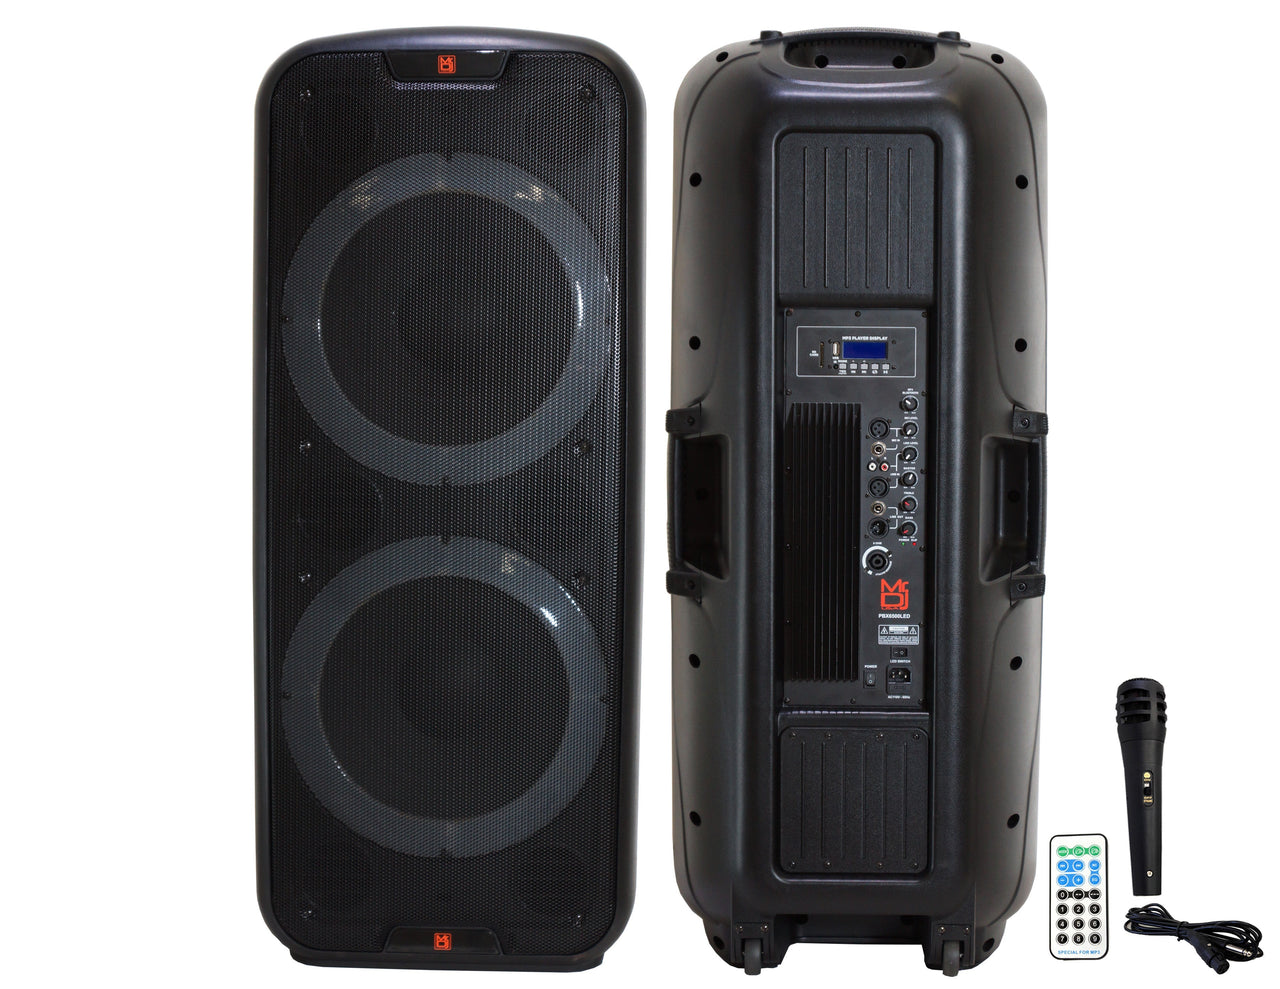 2 MR DJ PBX6500LED Professional Dual 15” 3-Way Full-Range Powered/Active DJ PA Multipurpose Live Sound Bluetooth Loudspeaker